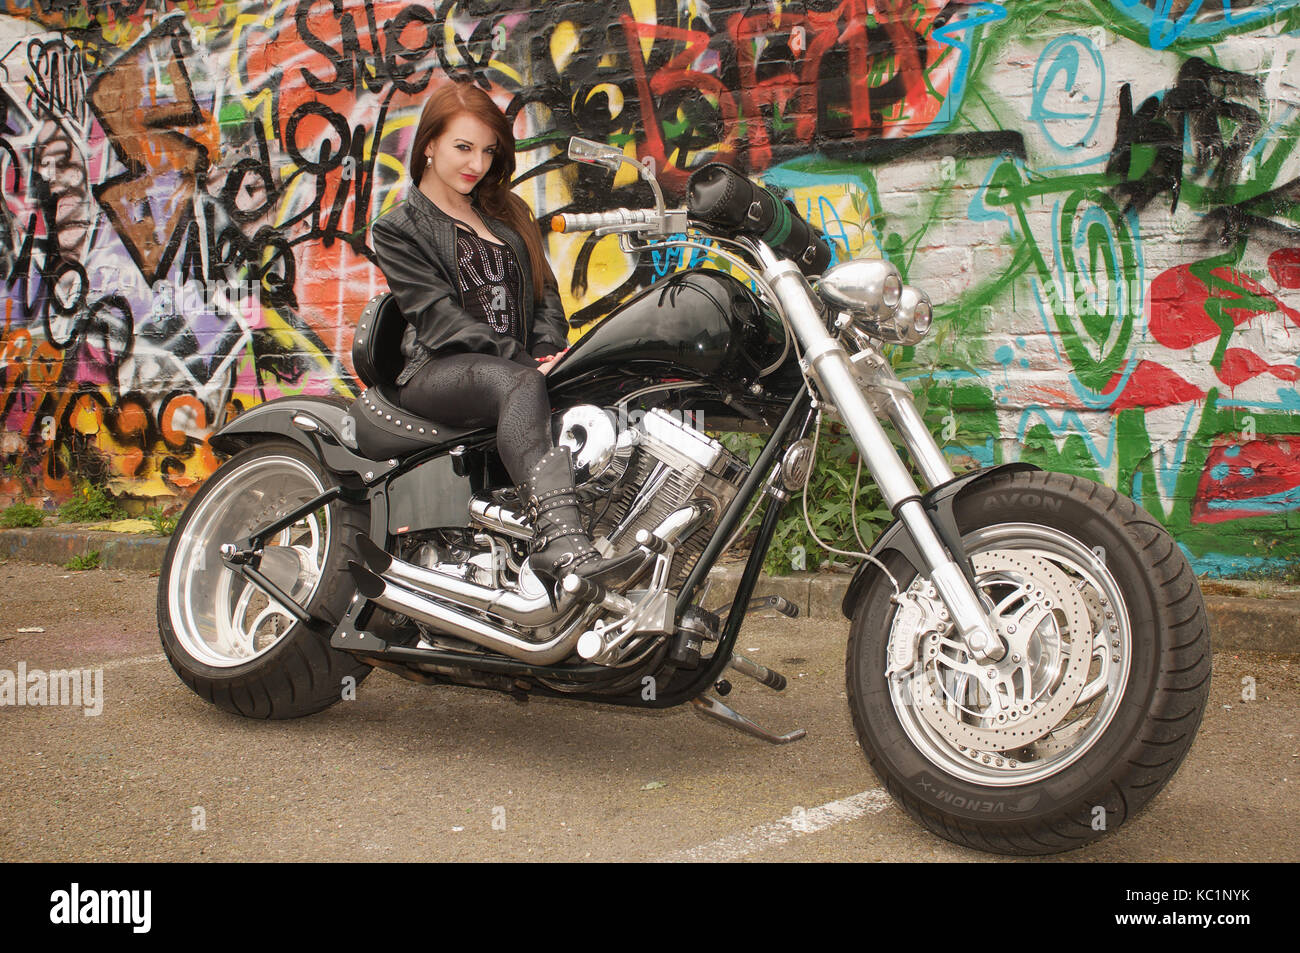 Pretty girl on a custom built chopper motorcycle in an urban location Stock Photo